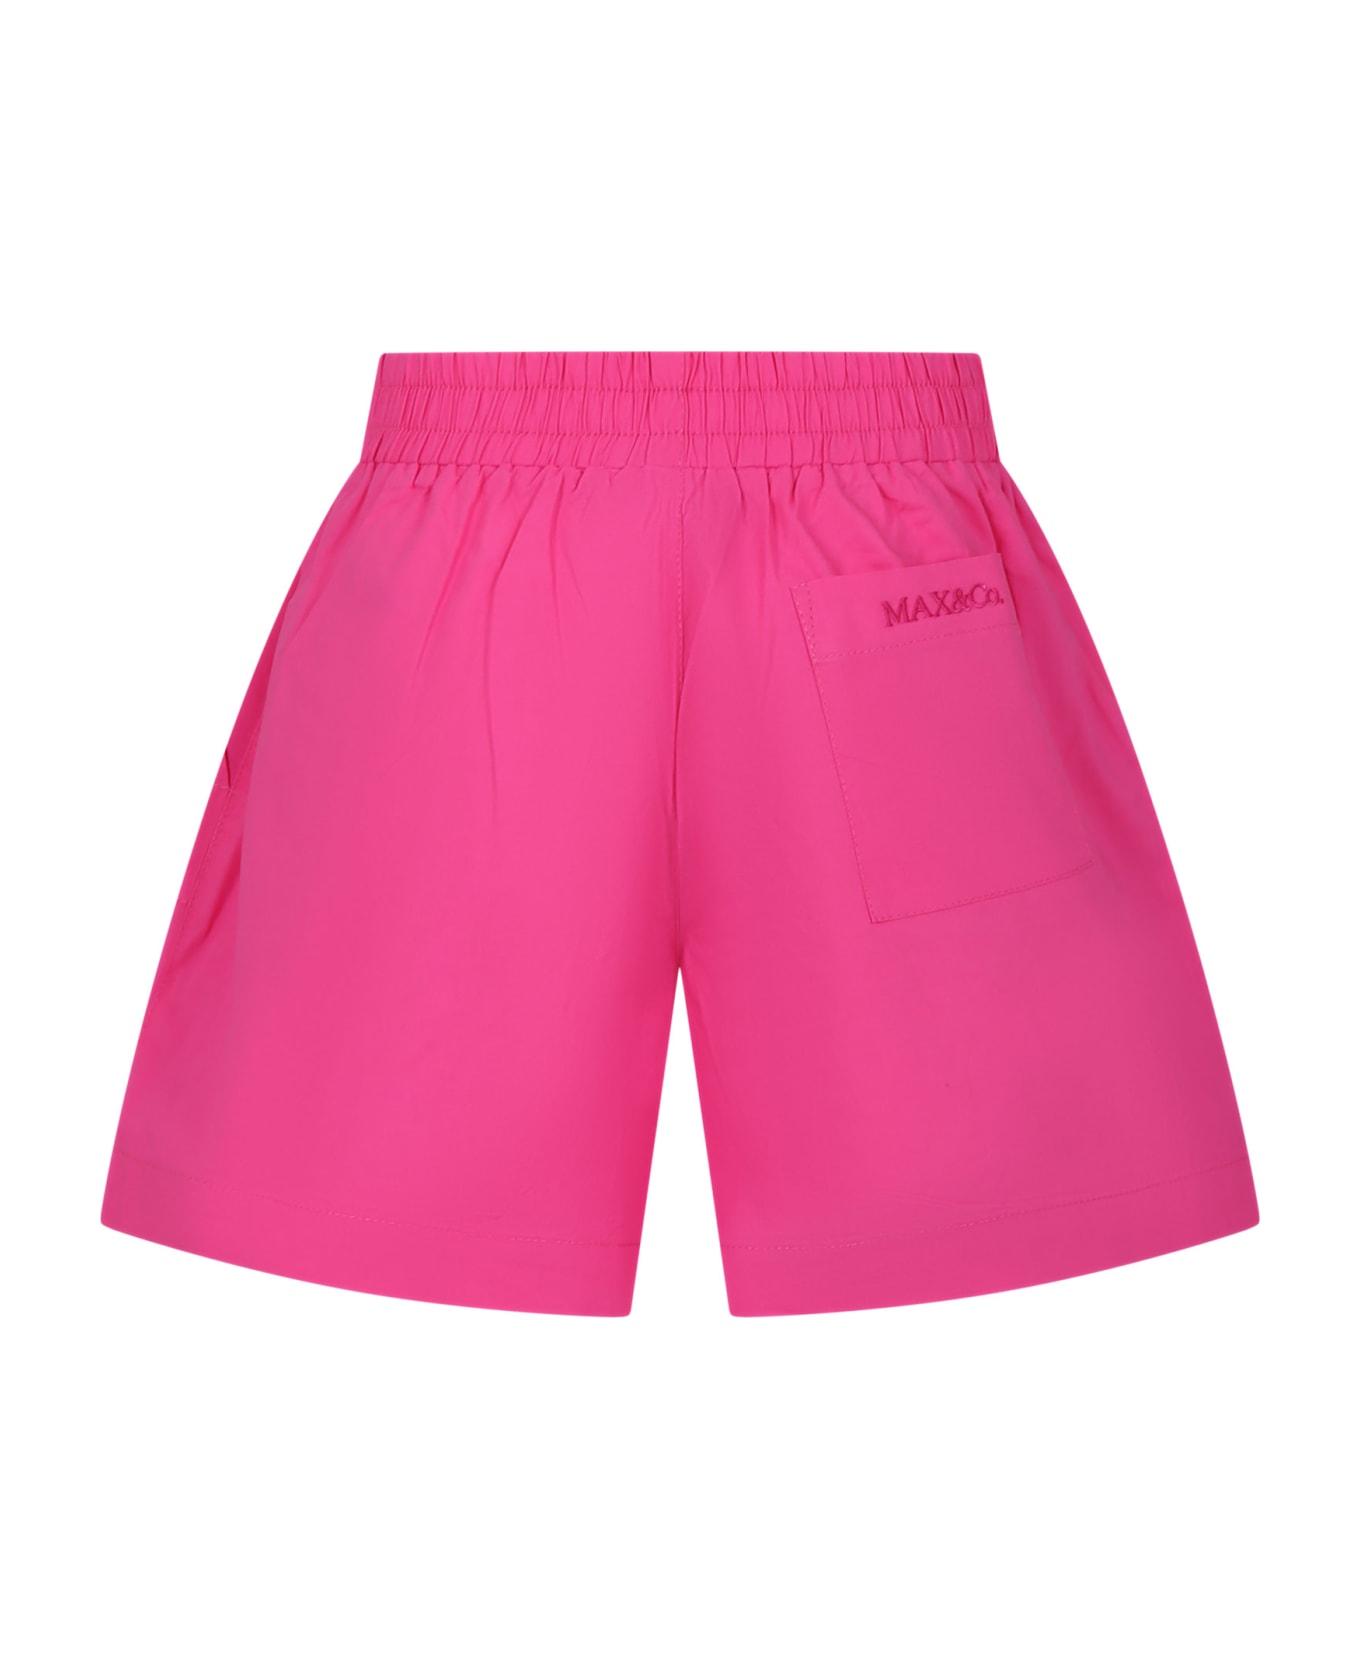 Max&Co. Fuchsia Shorts For Girl With Logo - Fuchsia